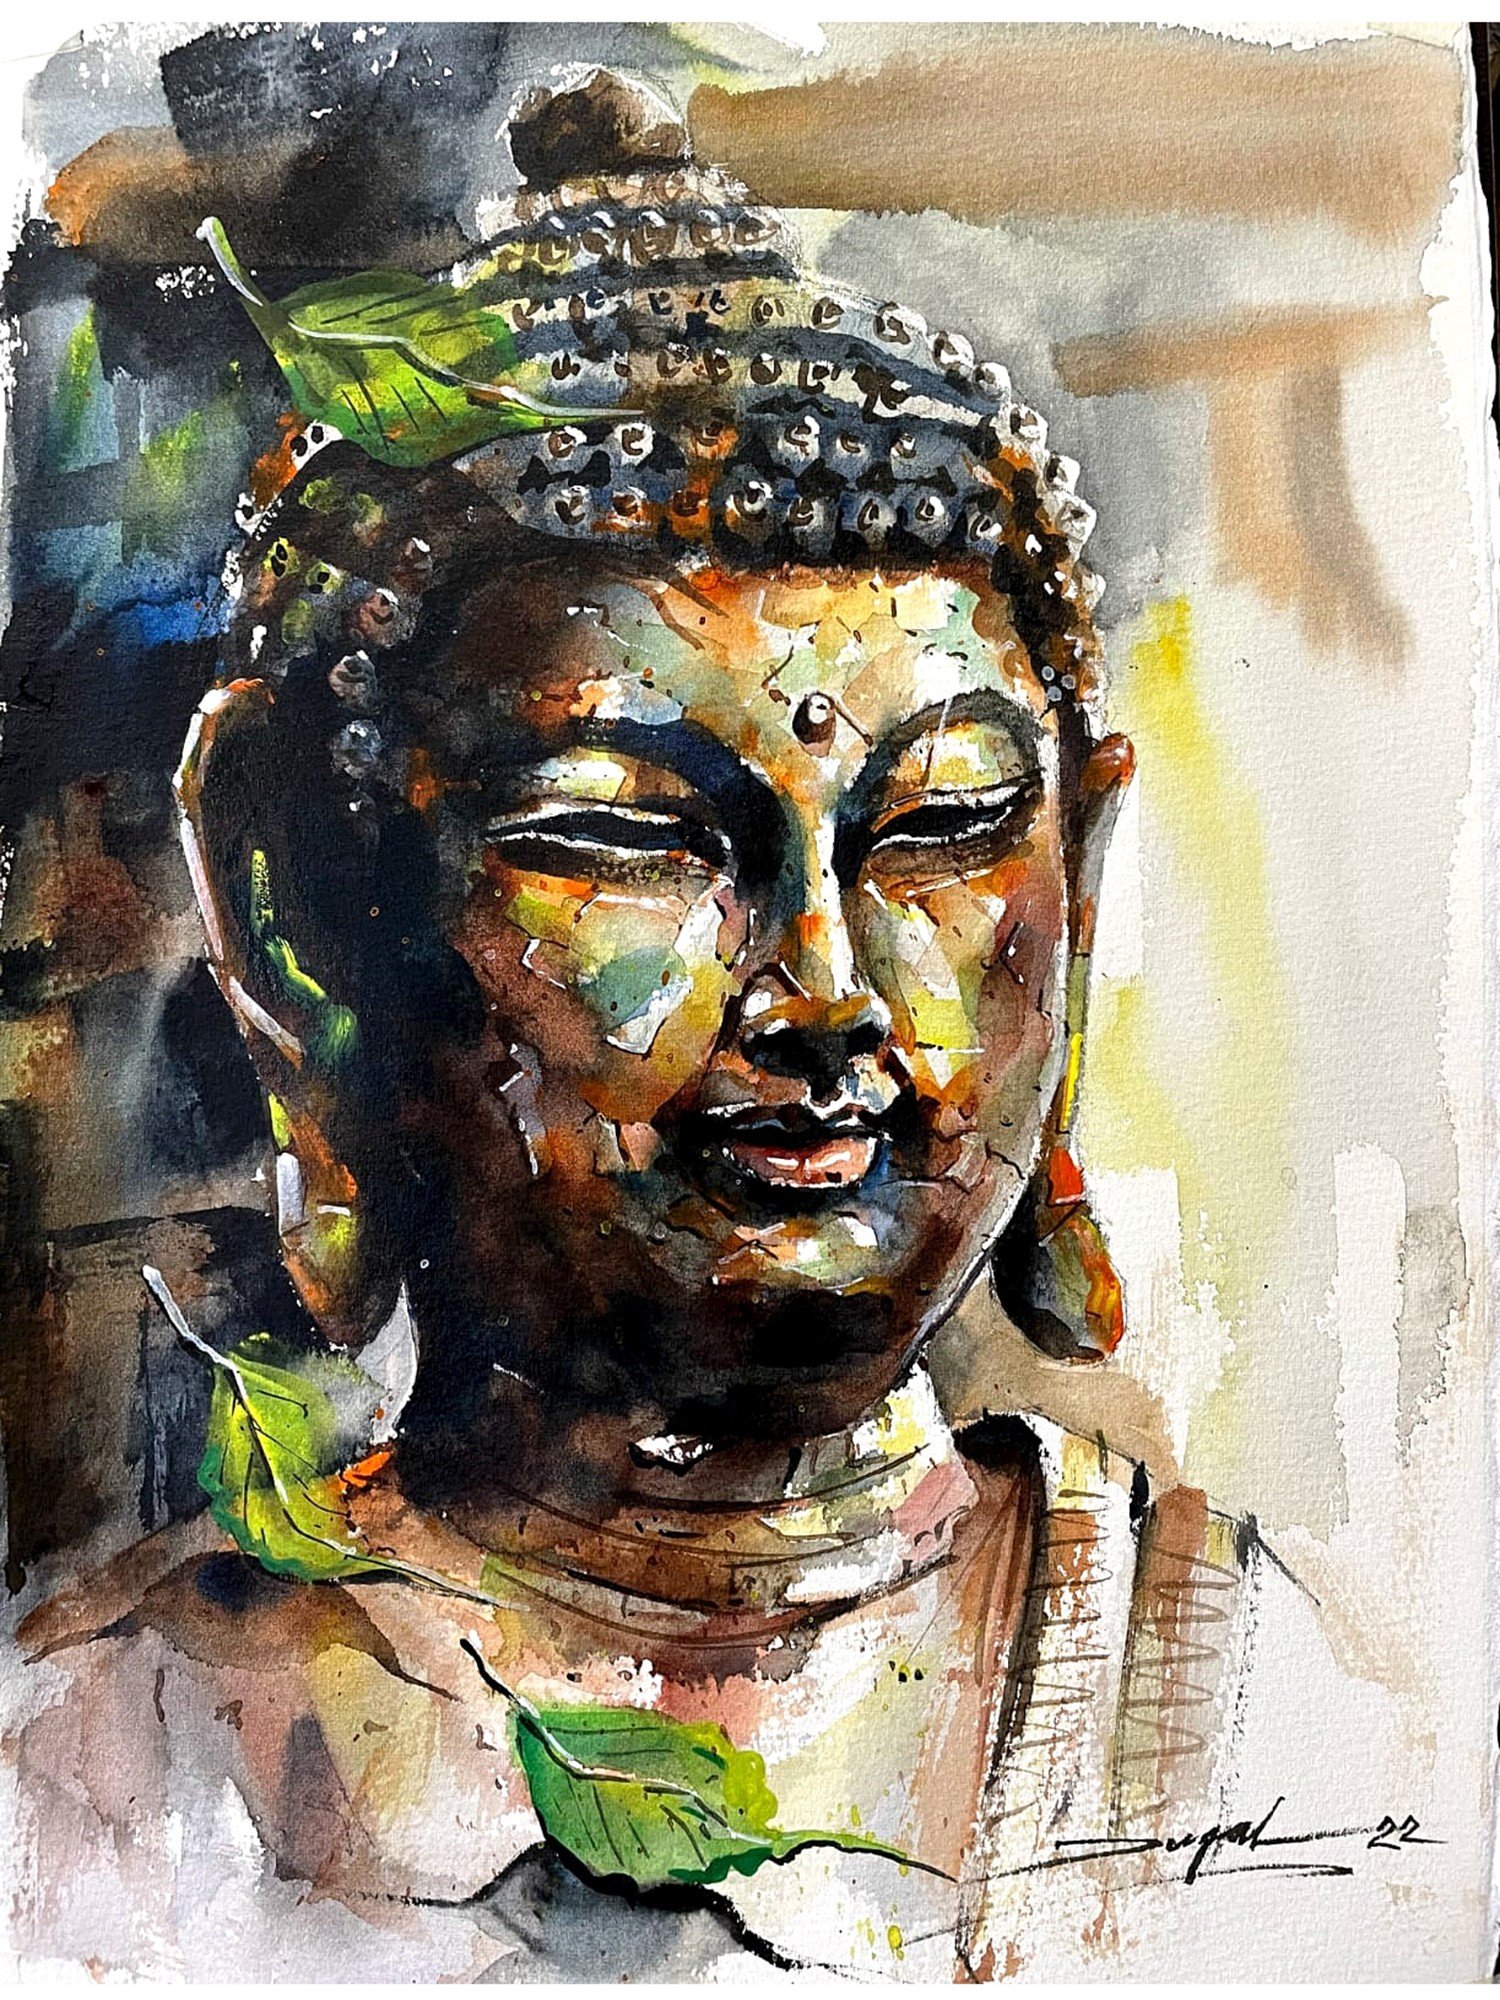 Buddha Paintings  Buy Buddha Paintings Online in India  Myntra